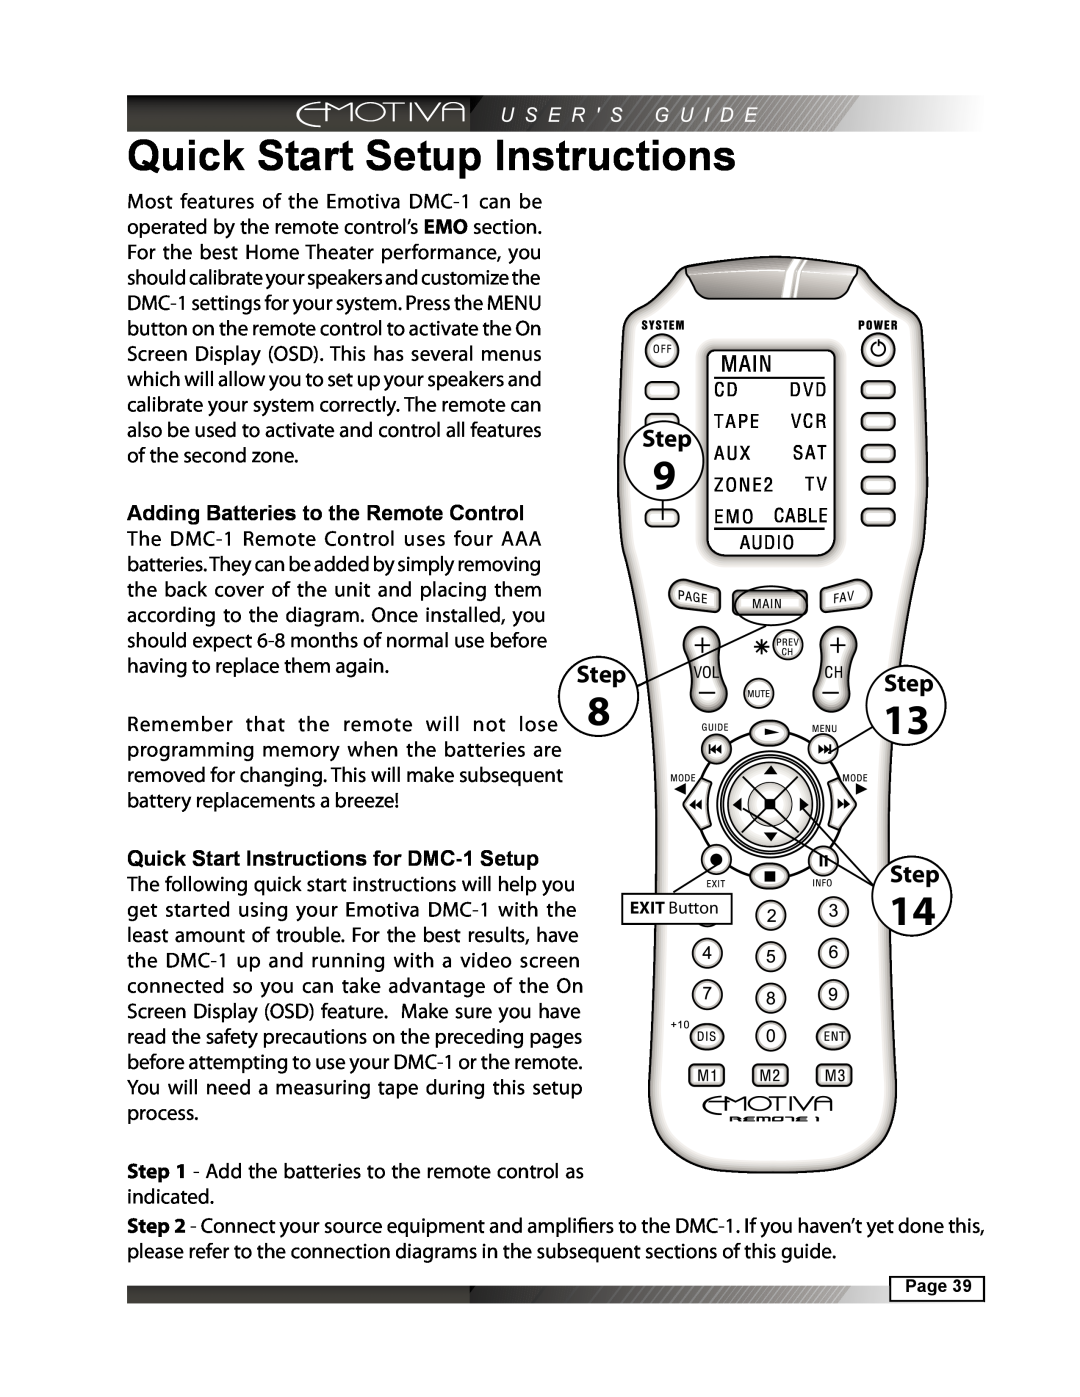 Emotiva DMC-1 manual Quick Start Setup Instructions, Step, Adding Batteries to the Remote Control 